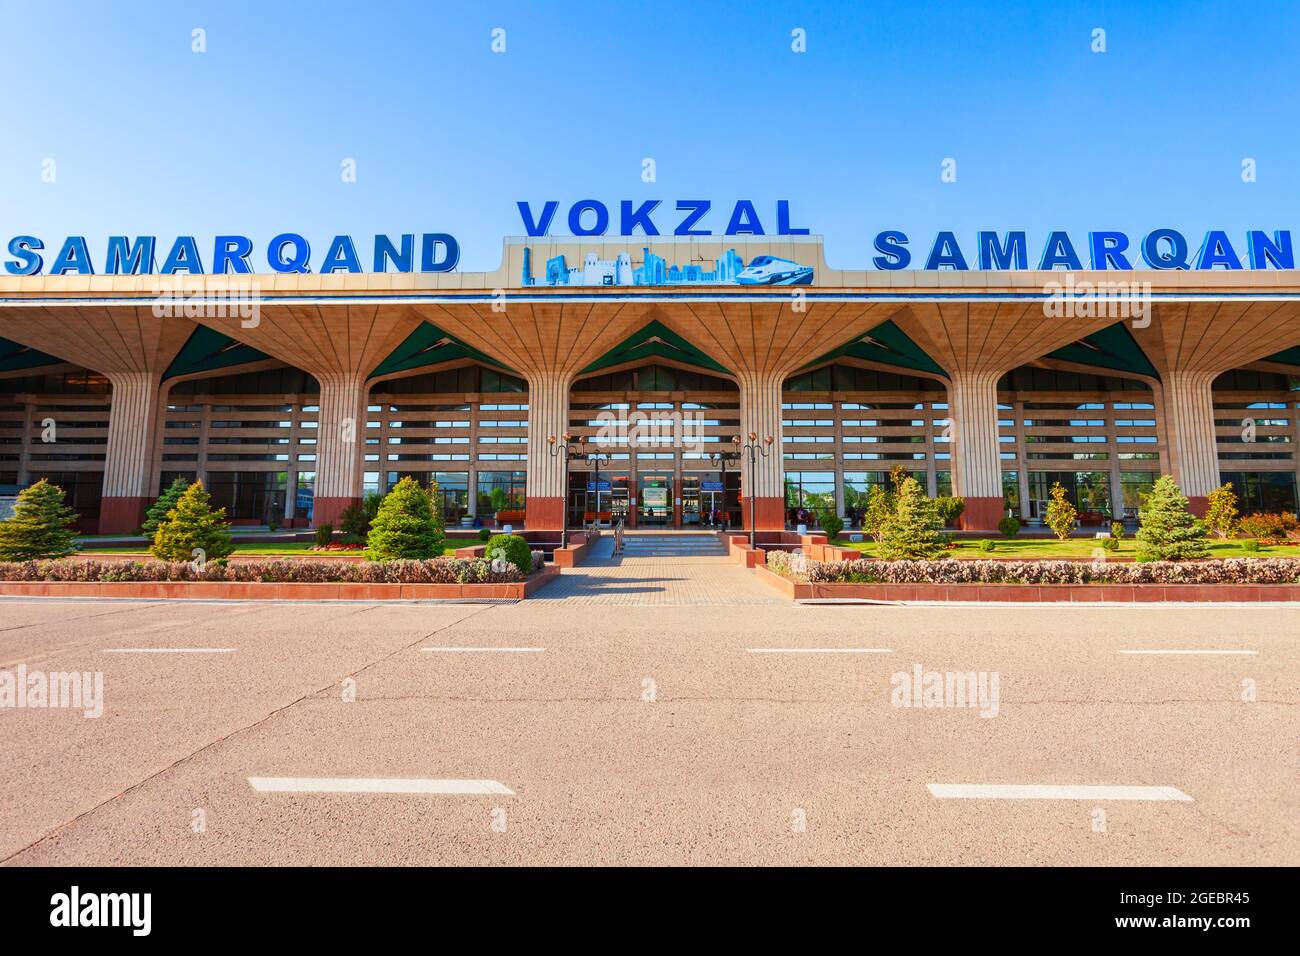 Samarkand, Uzbekistan - April 16, 2021: Samarqand Vokzal building is the main passenger railway station in Samarkand city, Uzbekistan Stock Photo